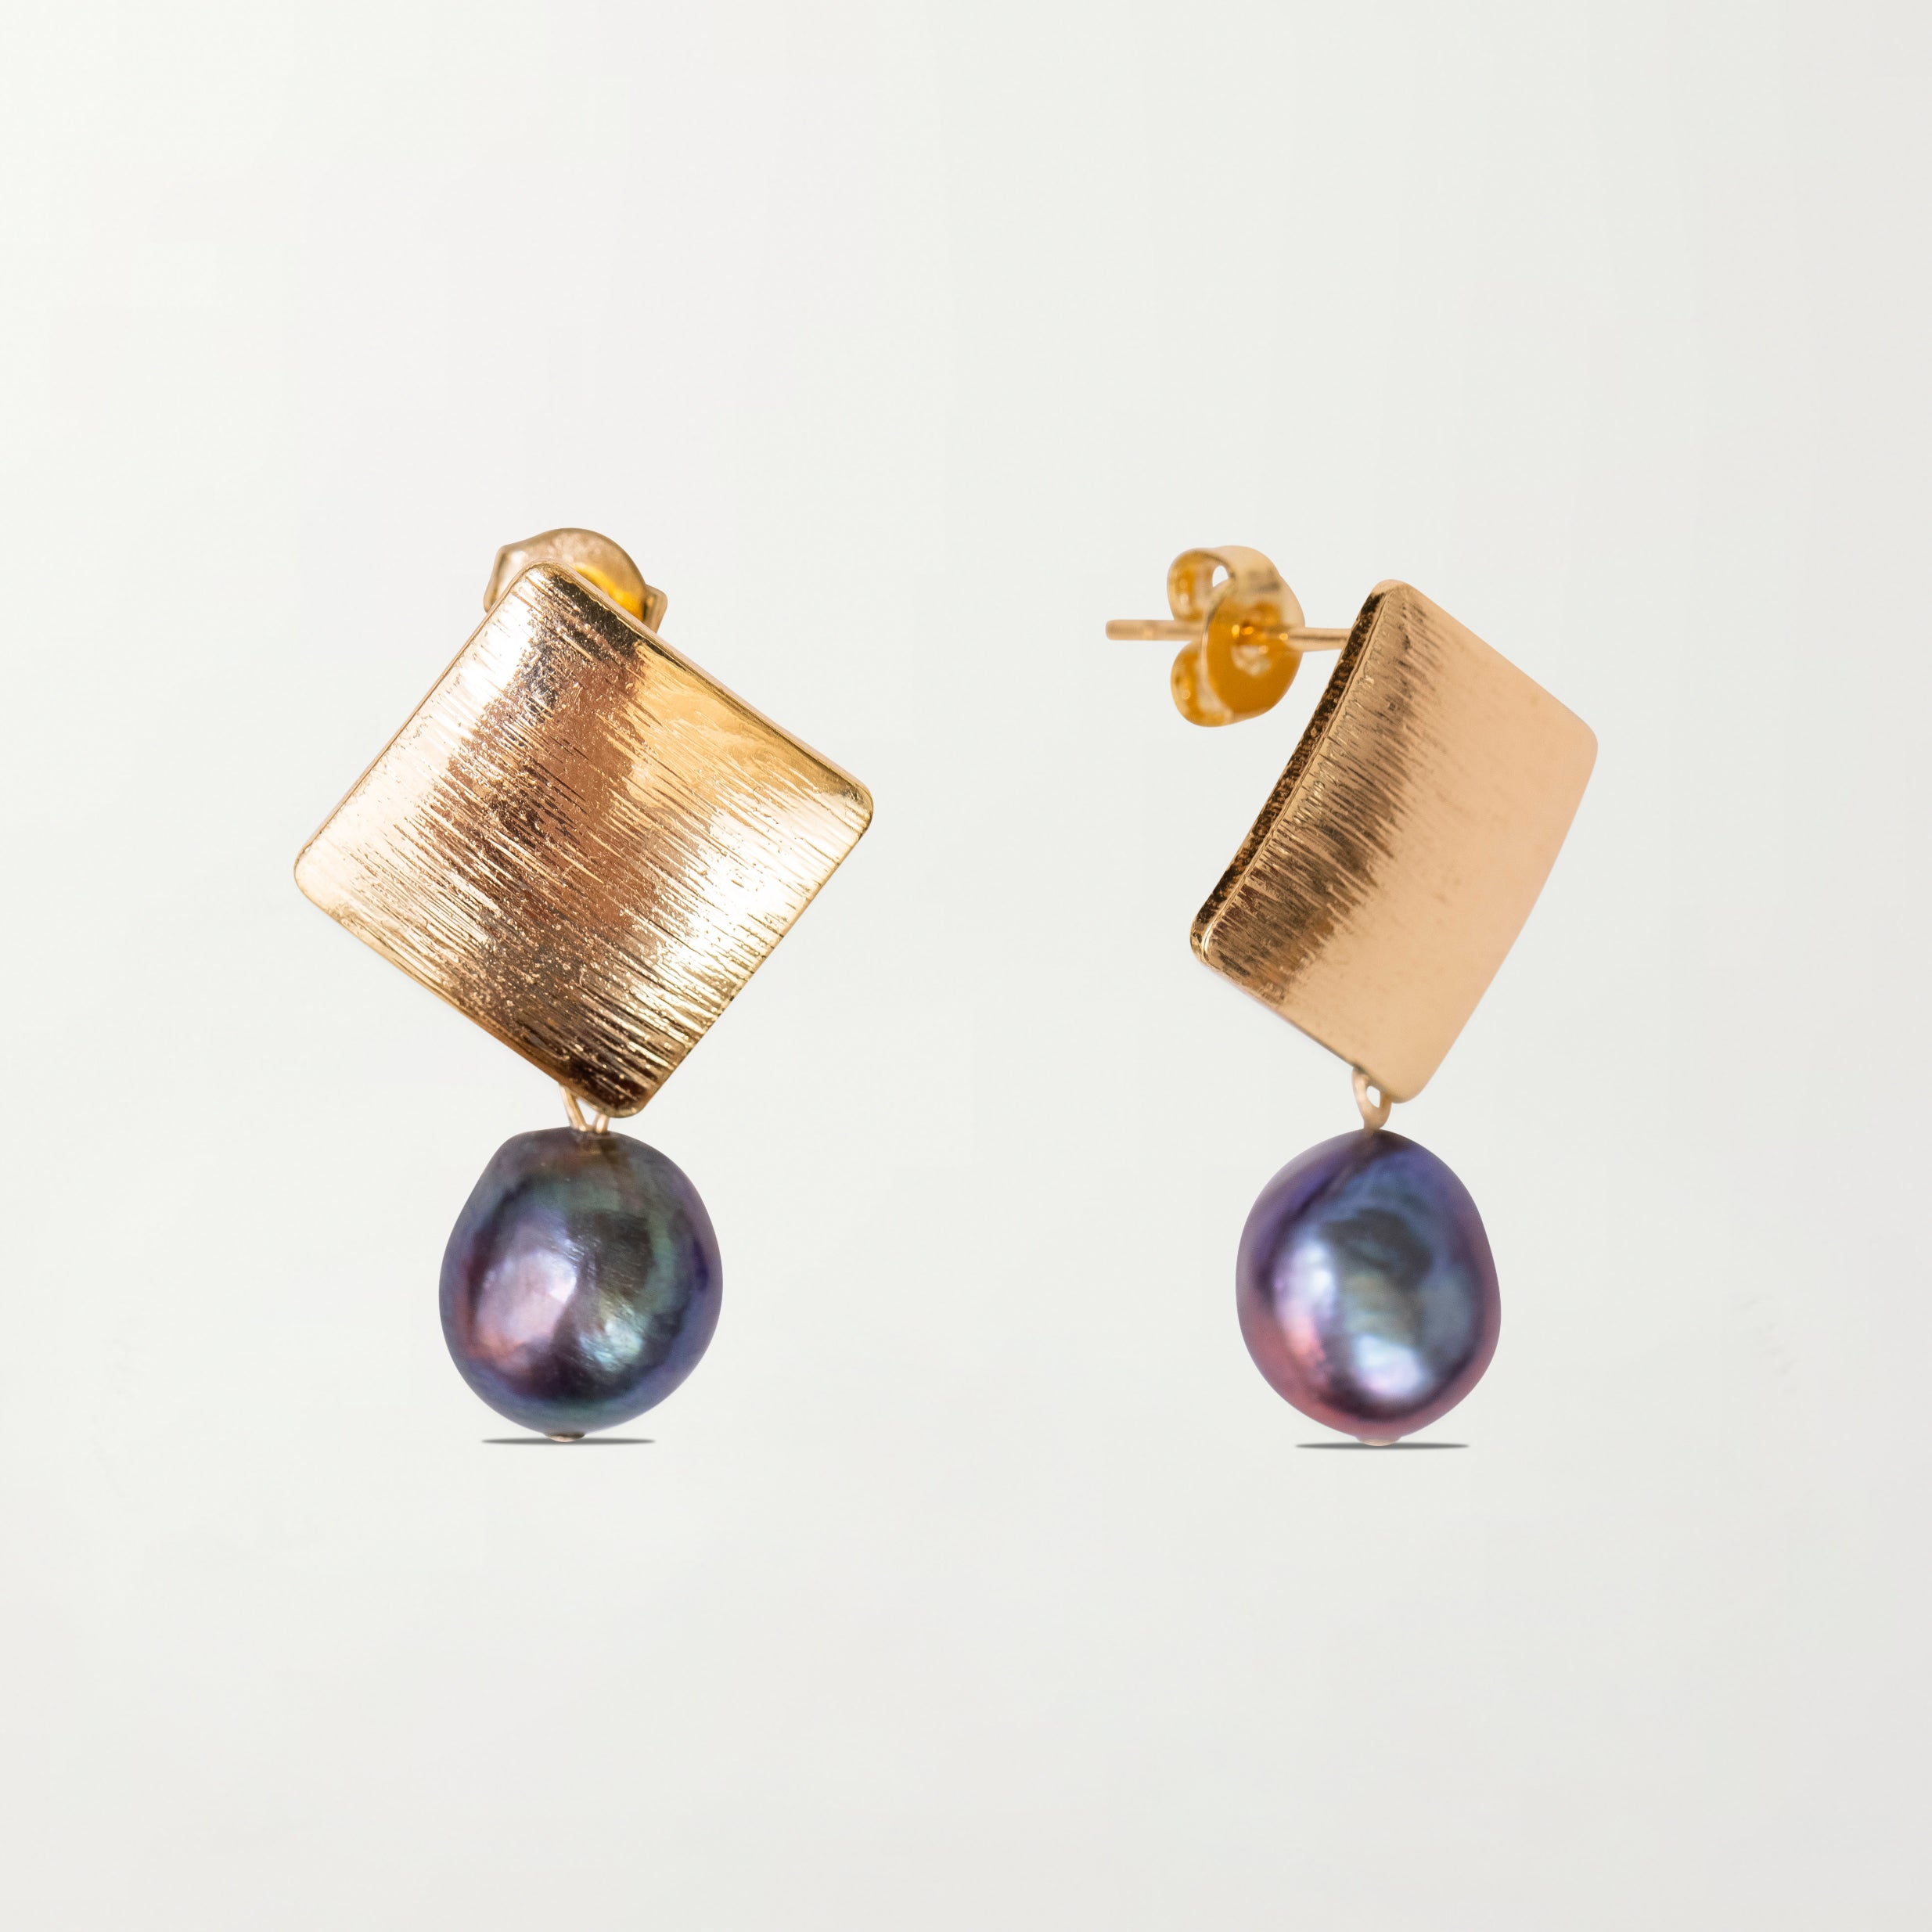 Picture of The Madrid Earrings in Tahitian Black Pearl